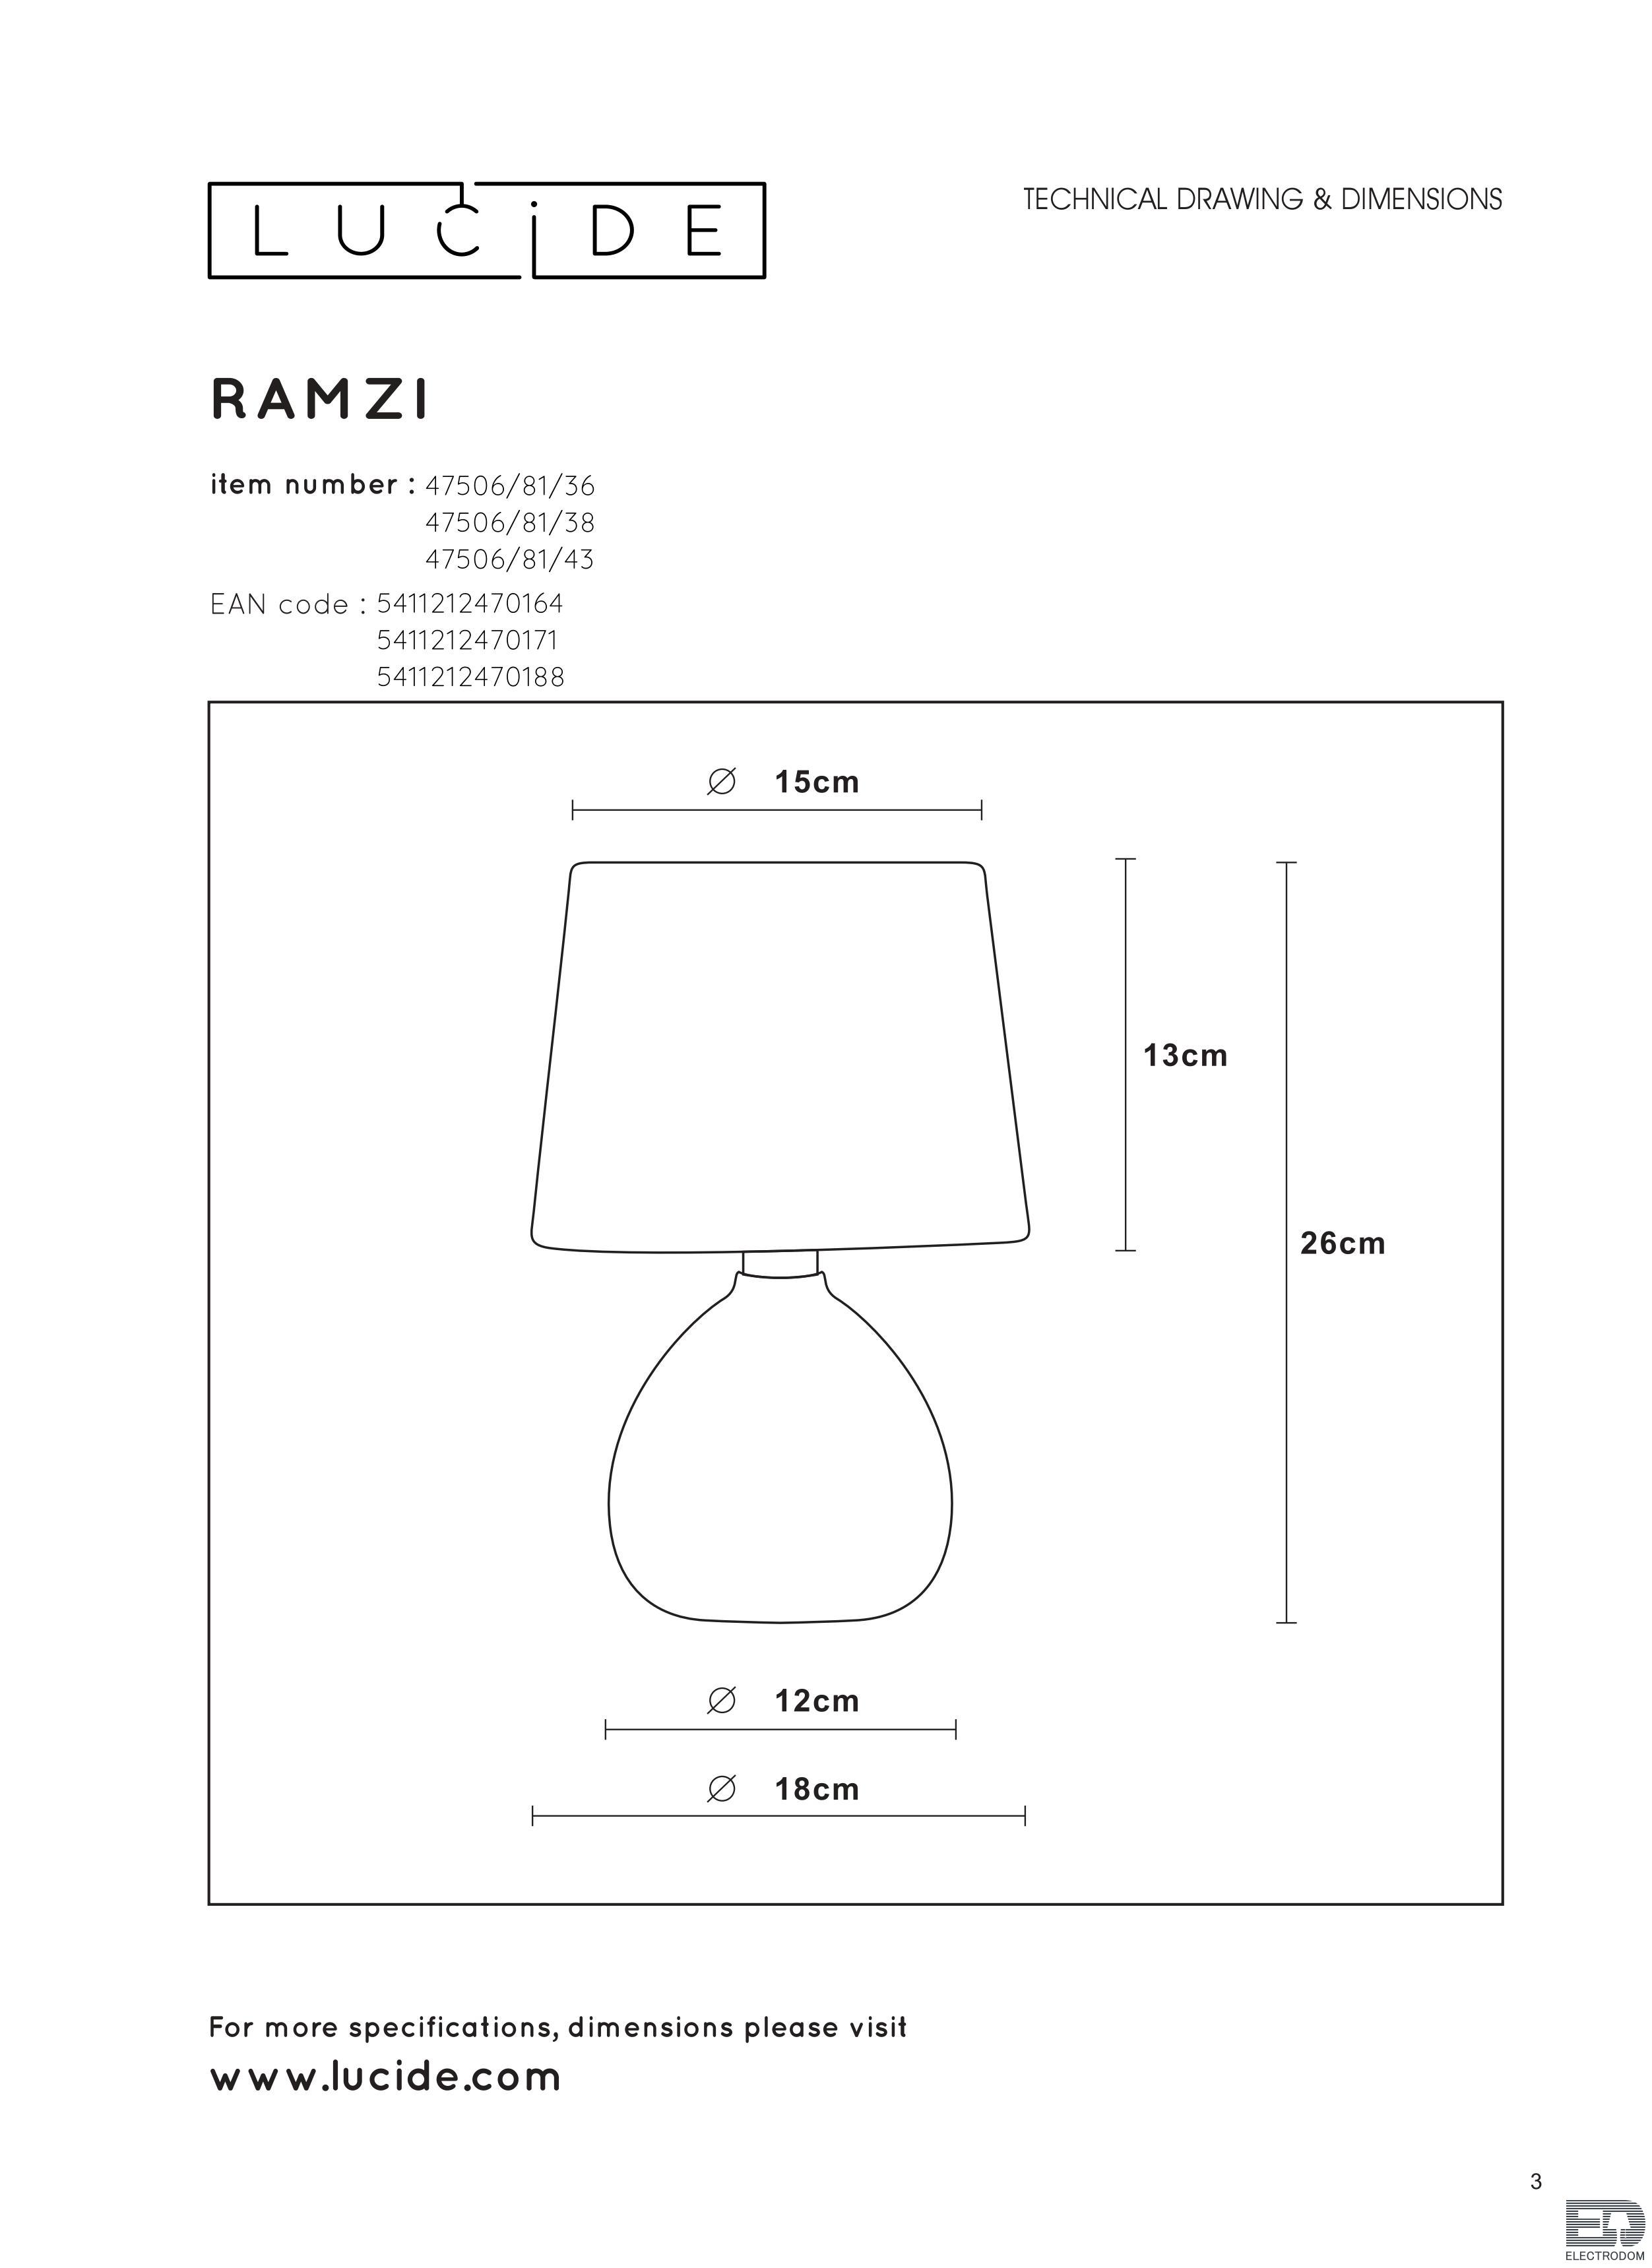 Настольная лампа Lucide Ramzi 47506/81/43 - цена и фото 4